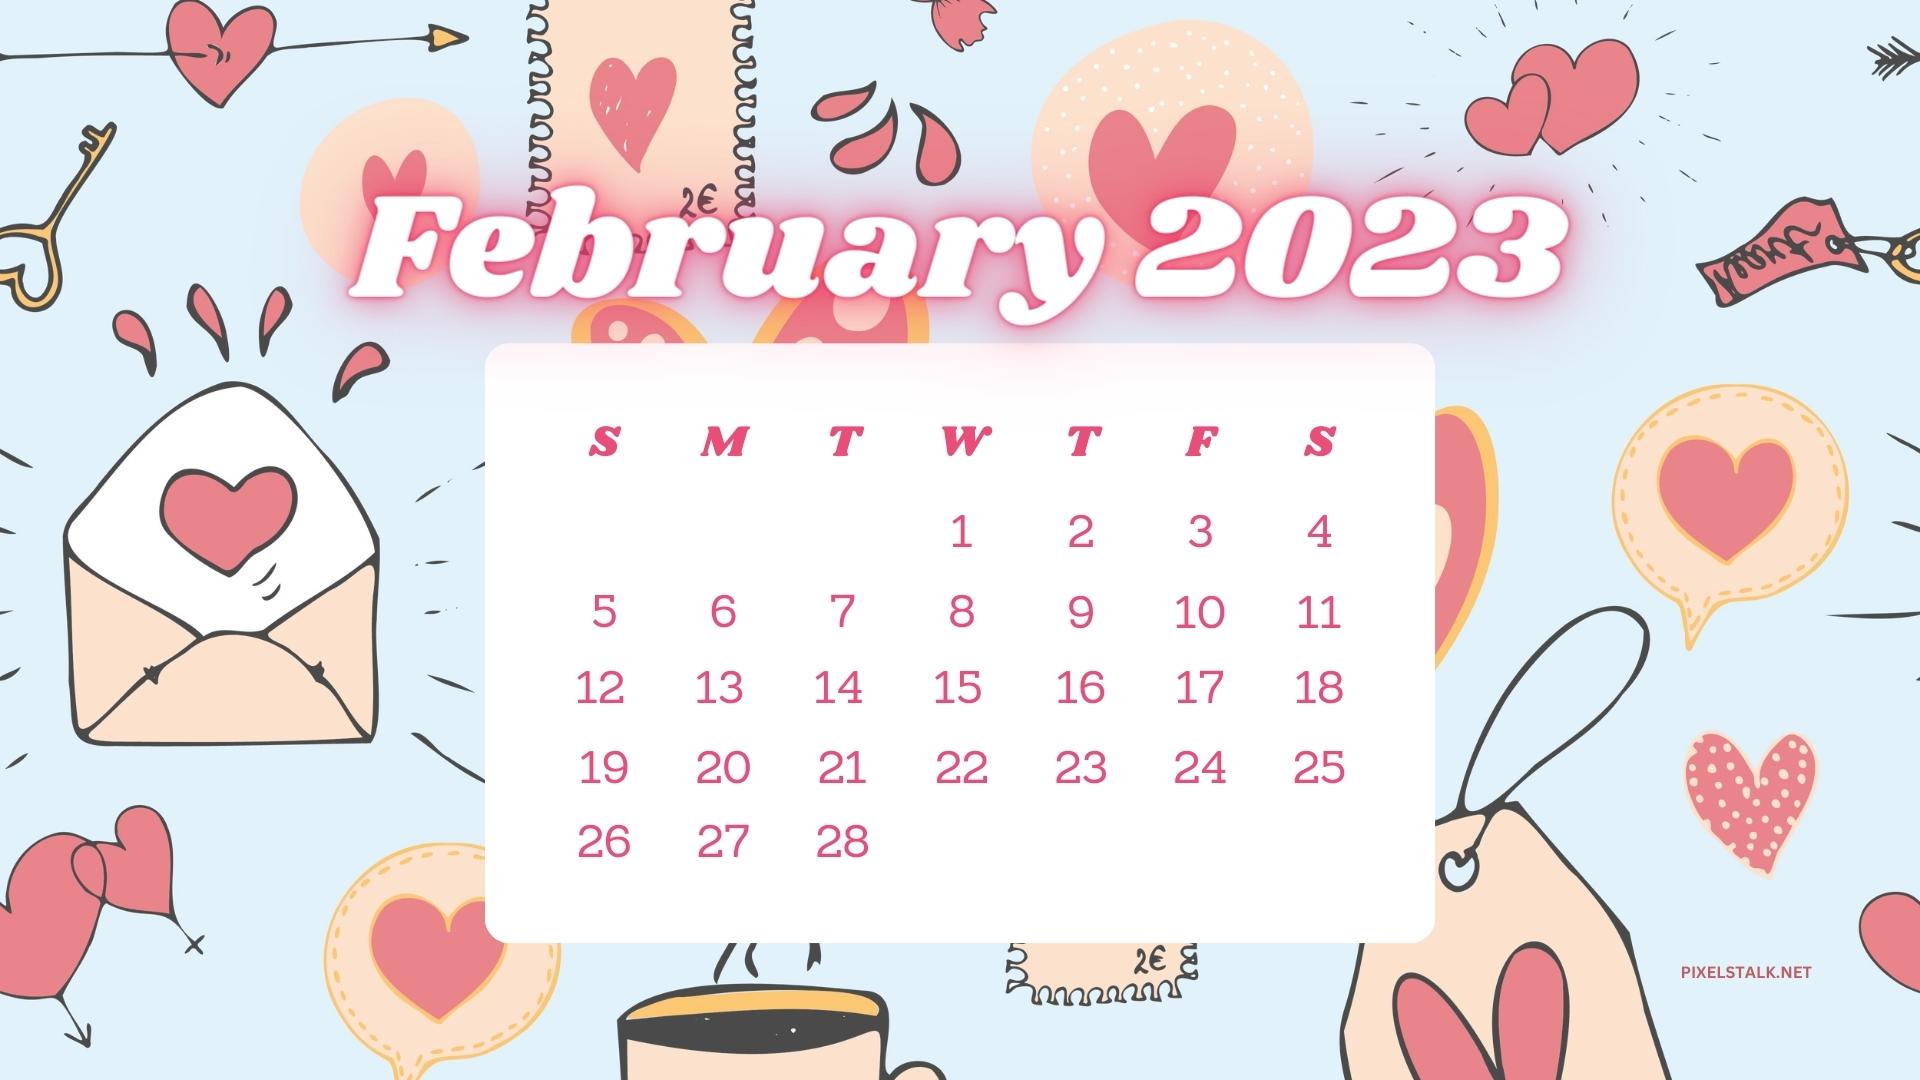 February 2023 Calendar Wallpaper HD Free Download